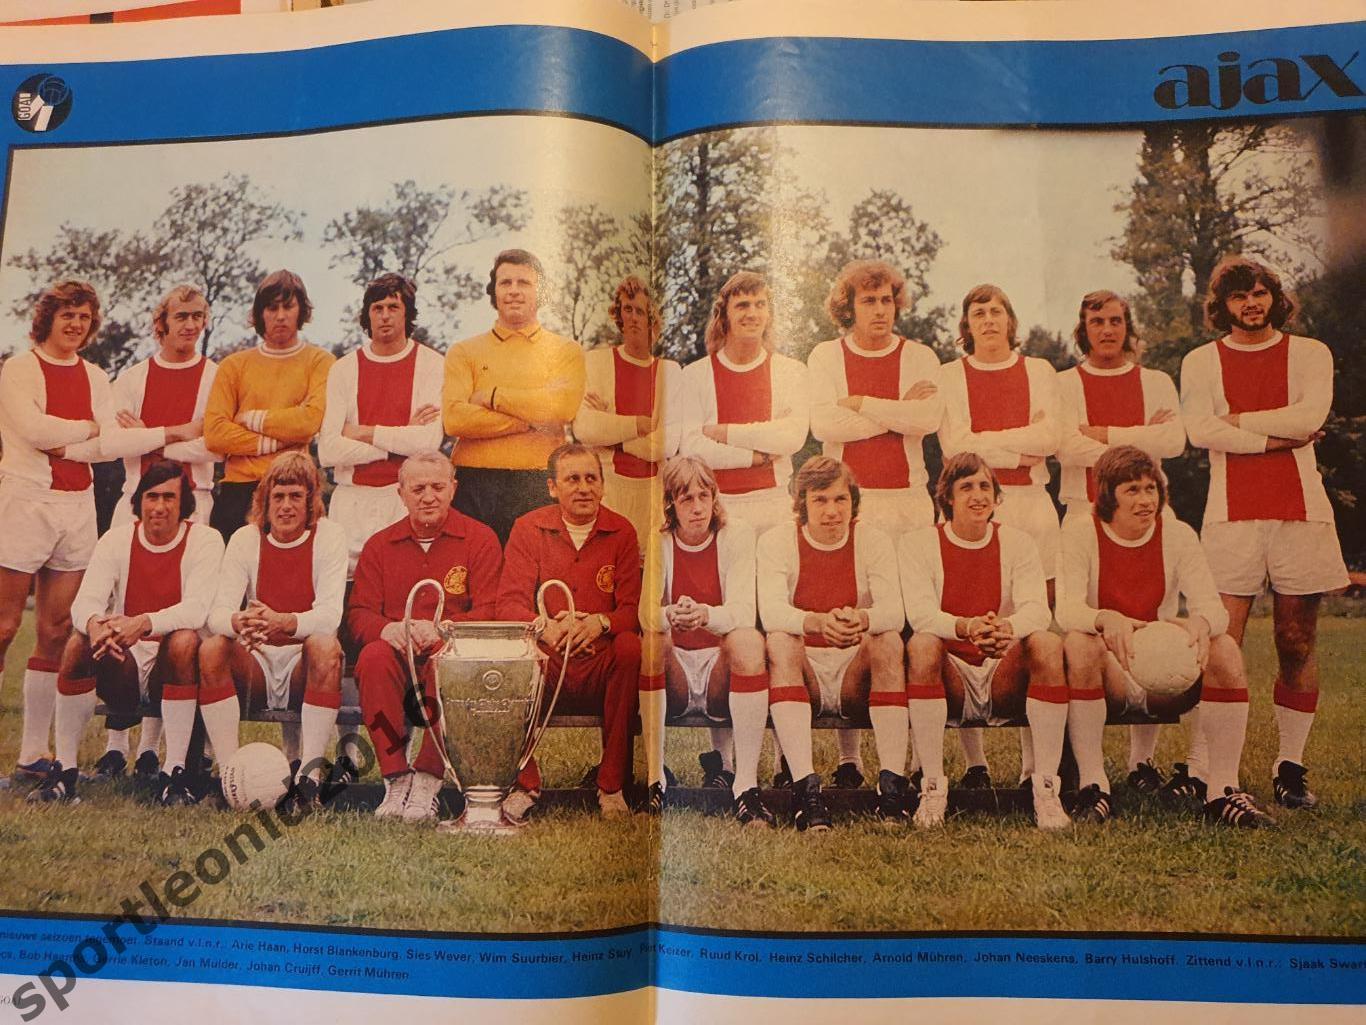 Voetbal International 1972.20 топ выпусков .3 5